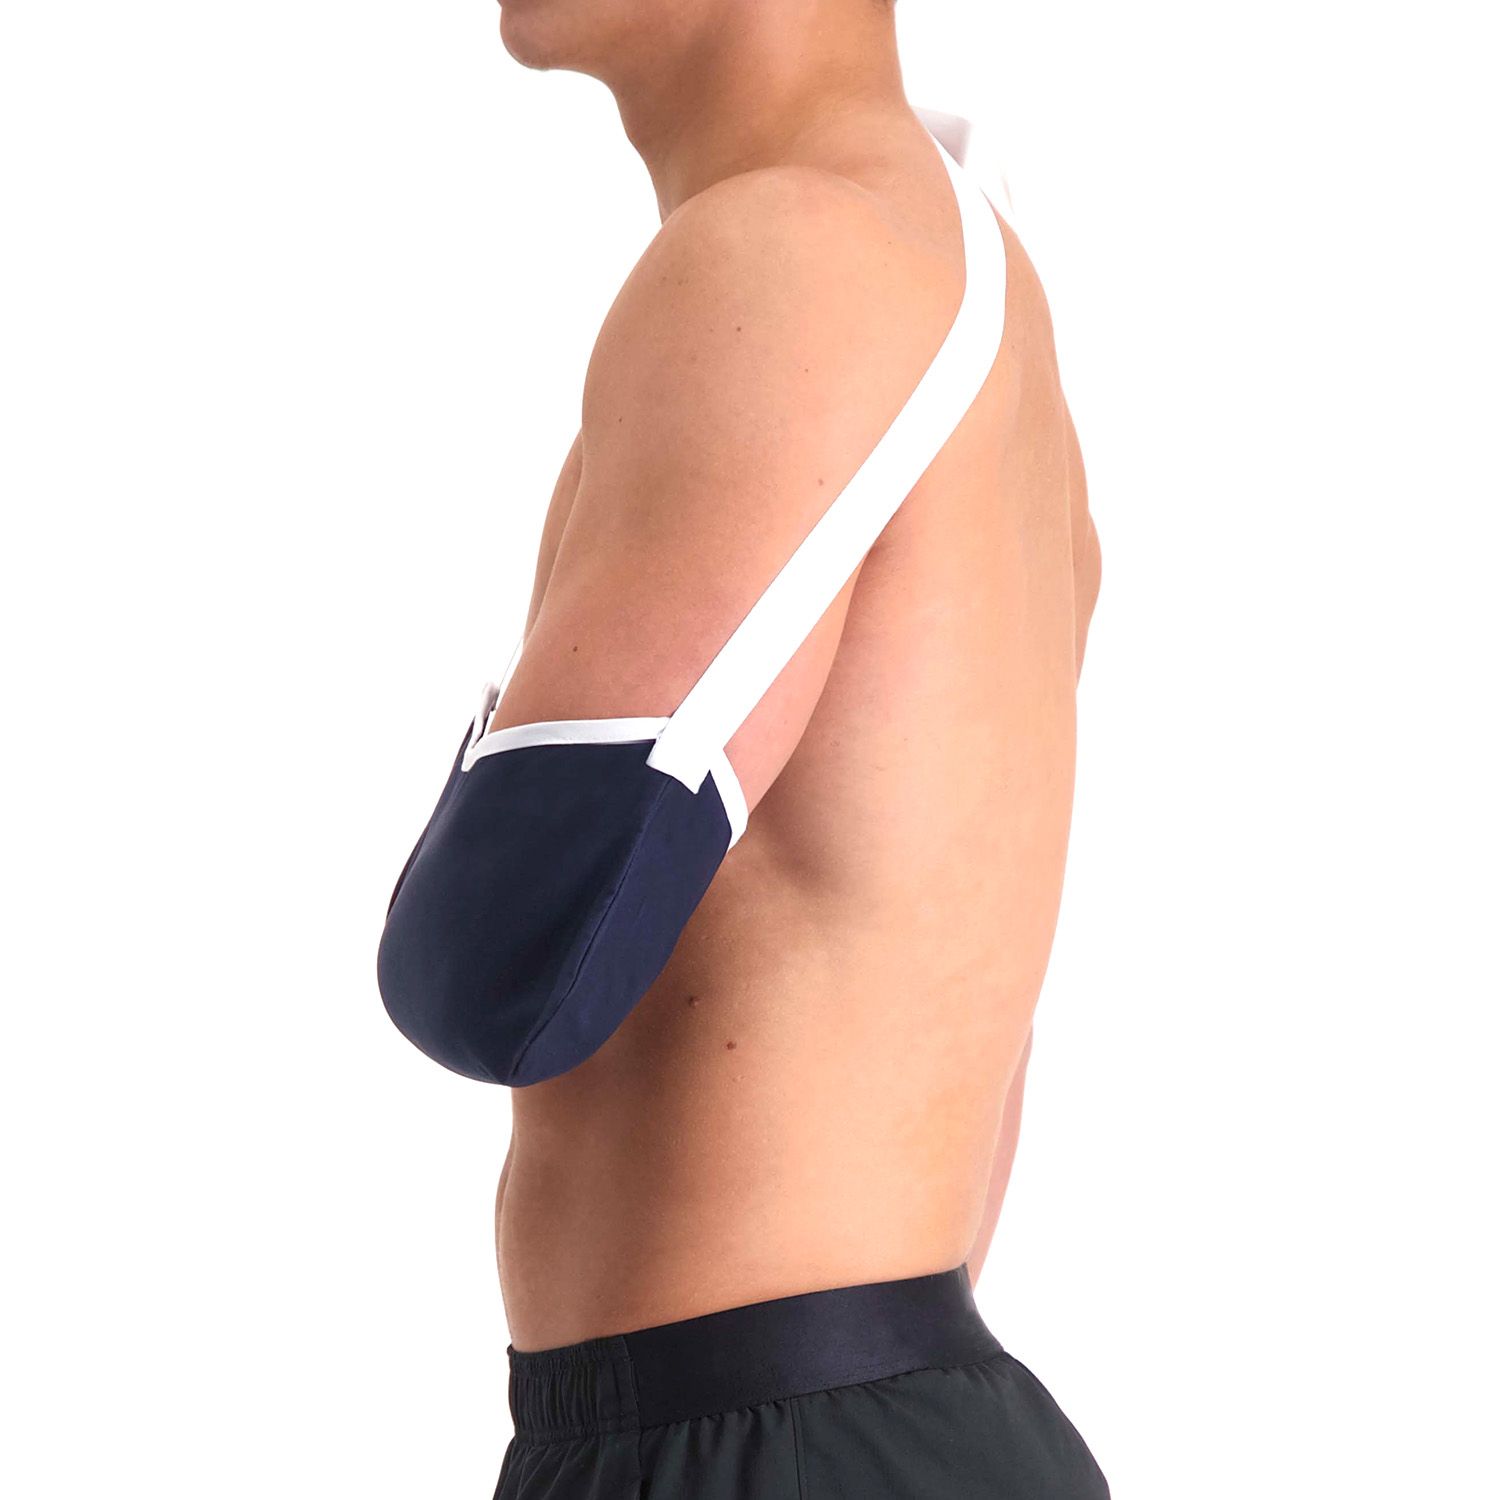 Dunimed arm sling worn on male model